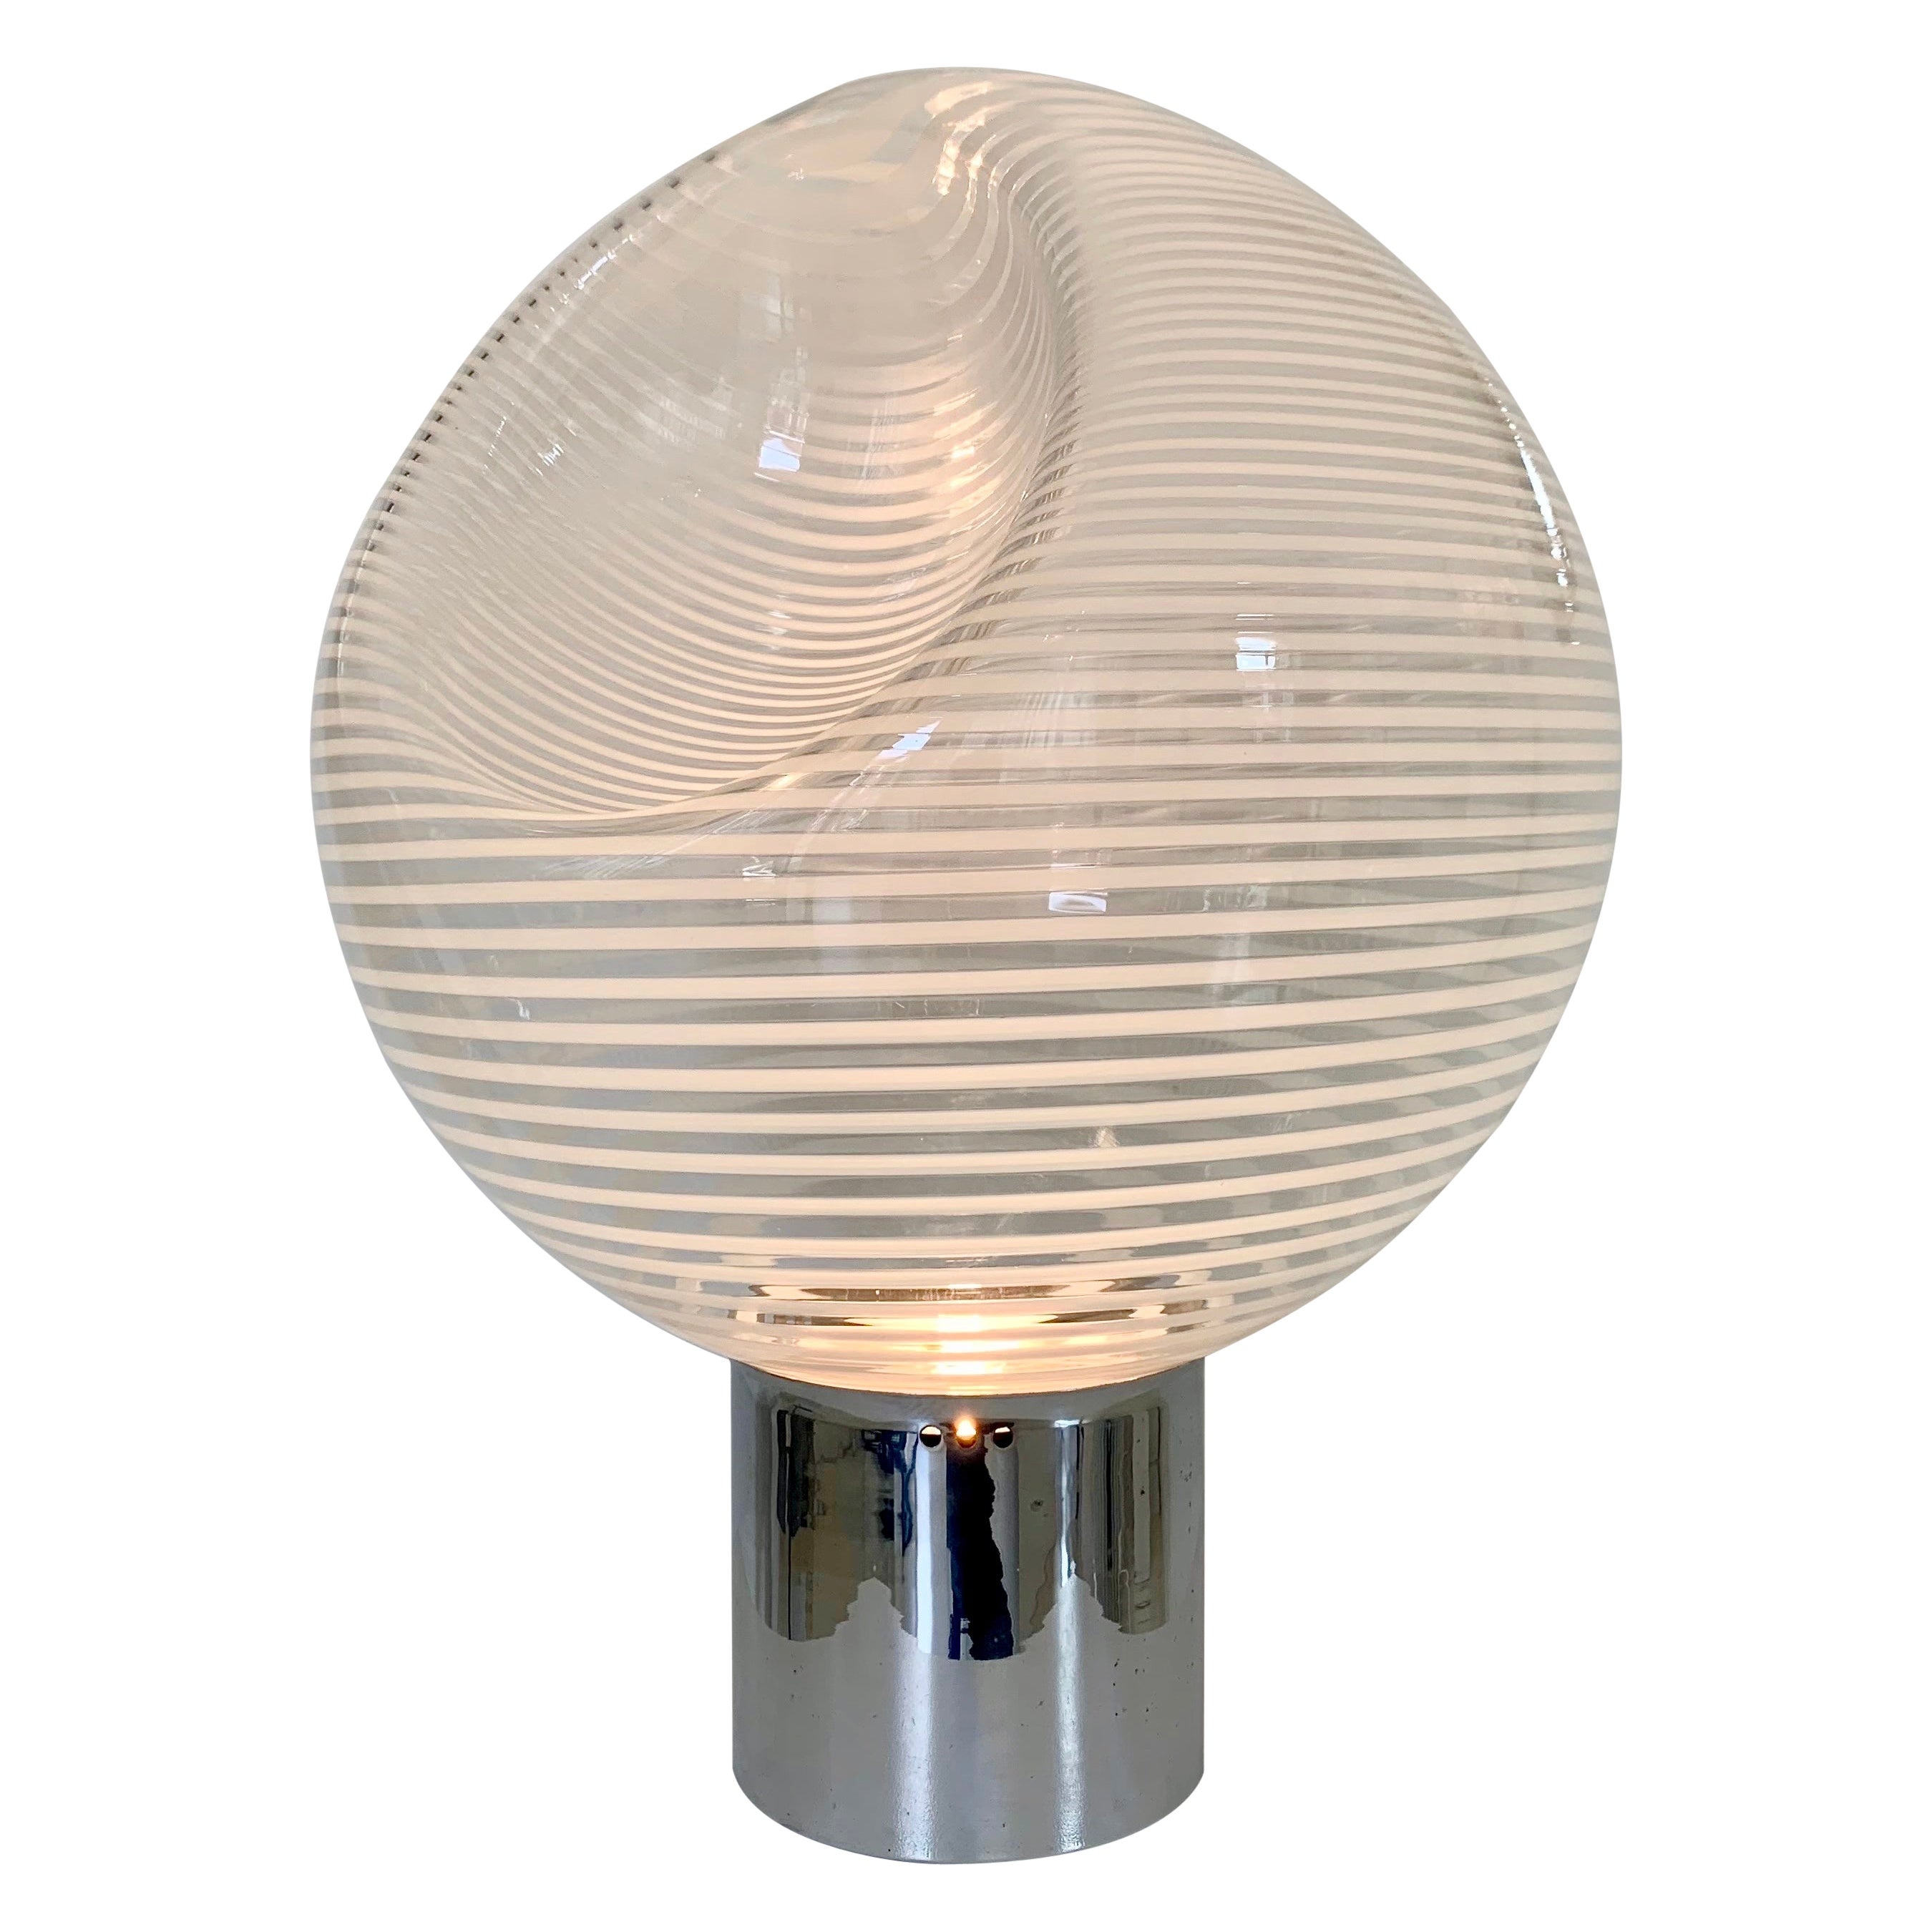 Vistosi Glass Table Lamp, Corba model, circa 1960, Italy. For Sale